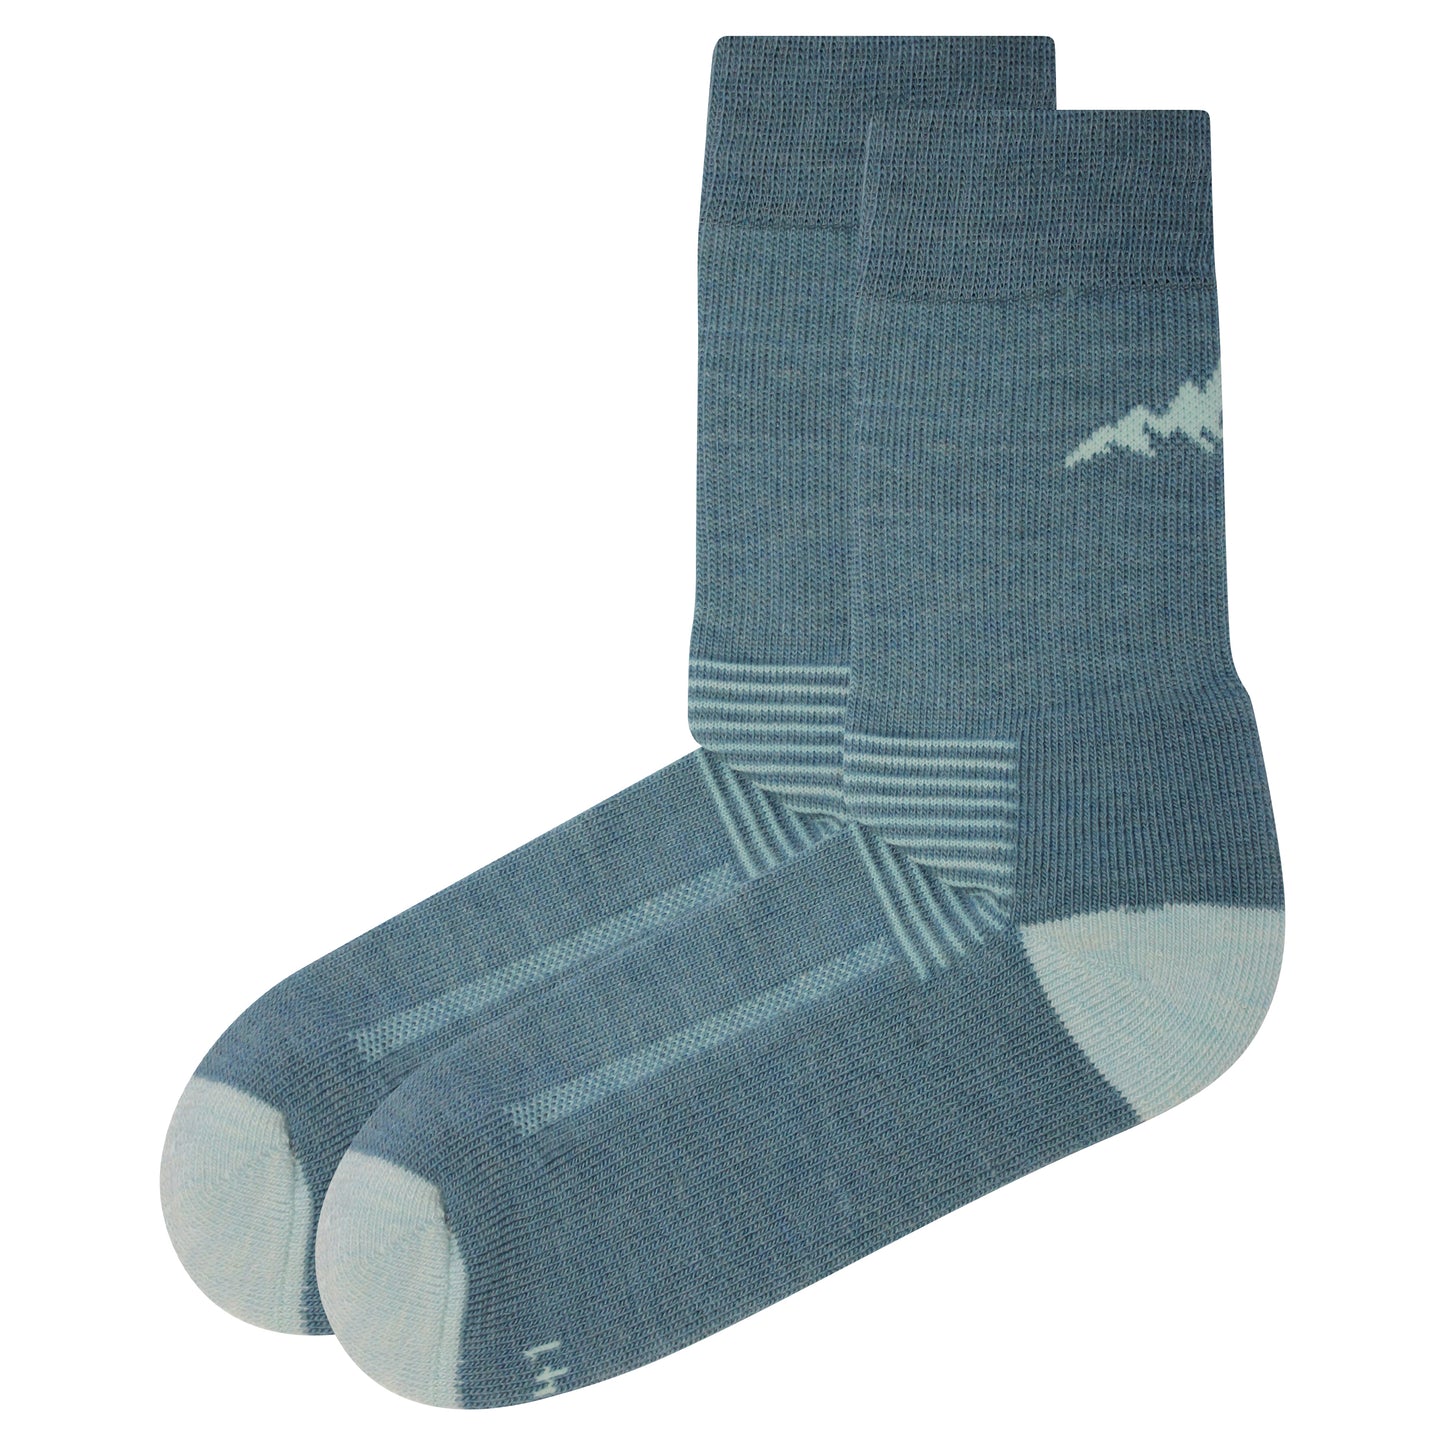 Wild Atlantic Merino Wool Hiking / Walking Socks | Light Blue